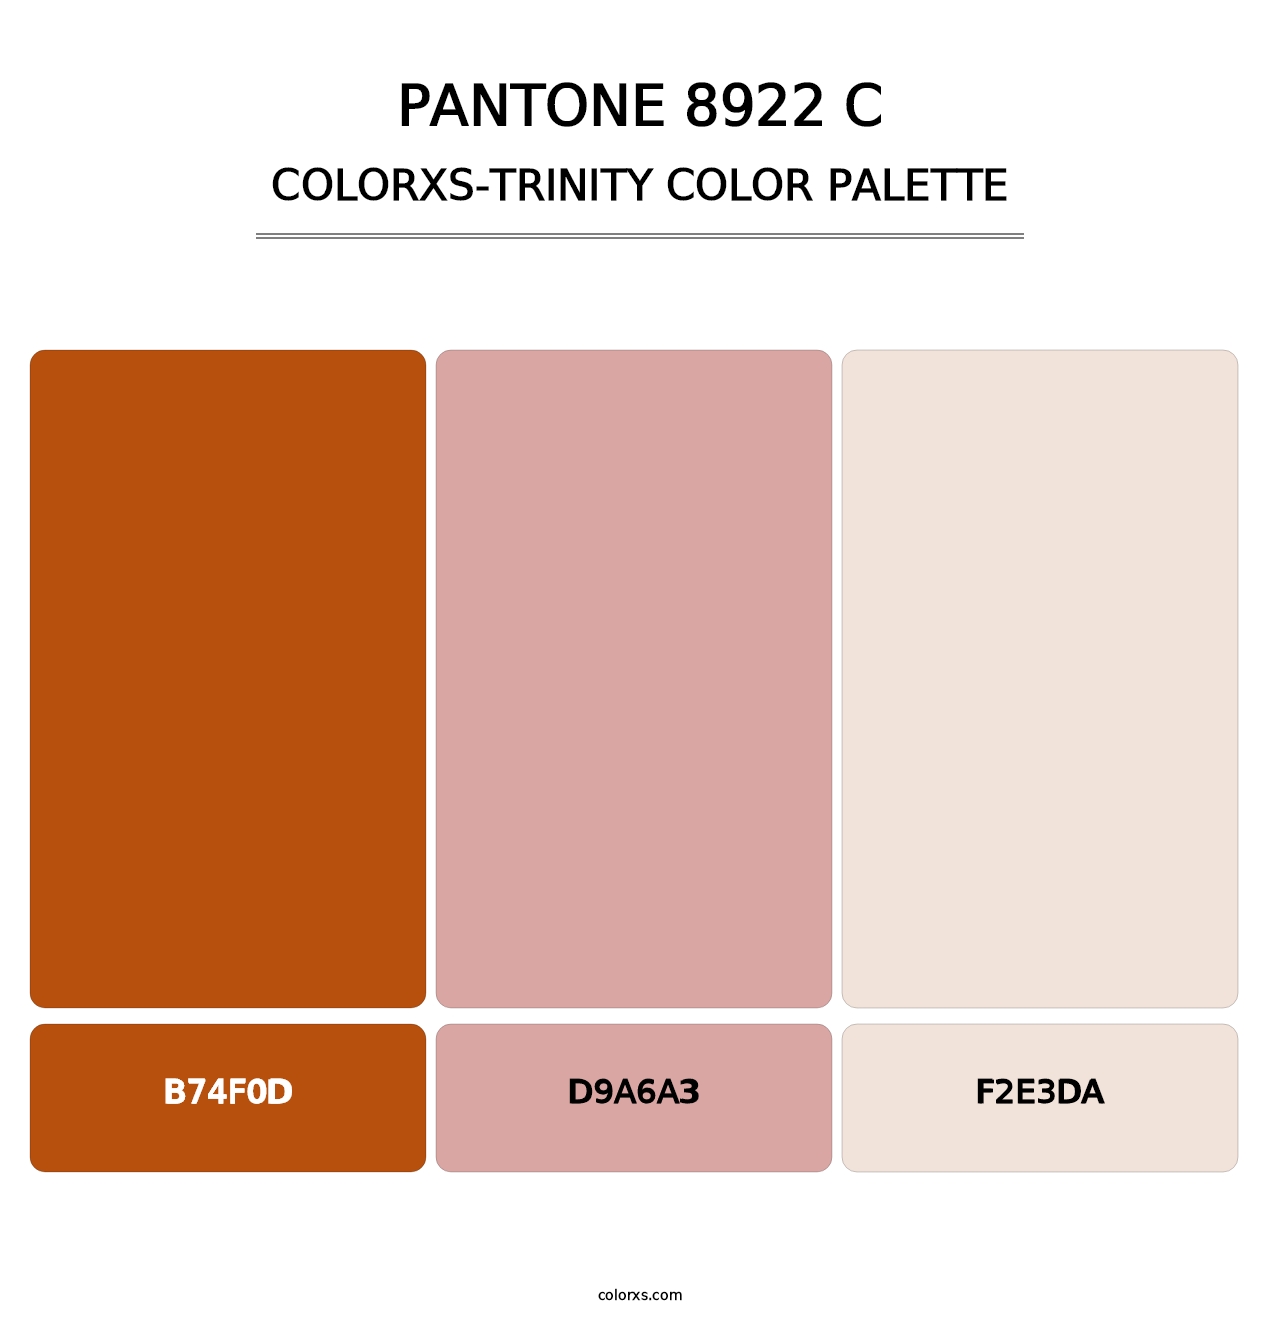 PANTONE 8922 C - Colorxs Trinity Palette